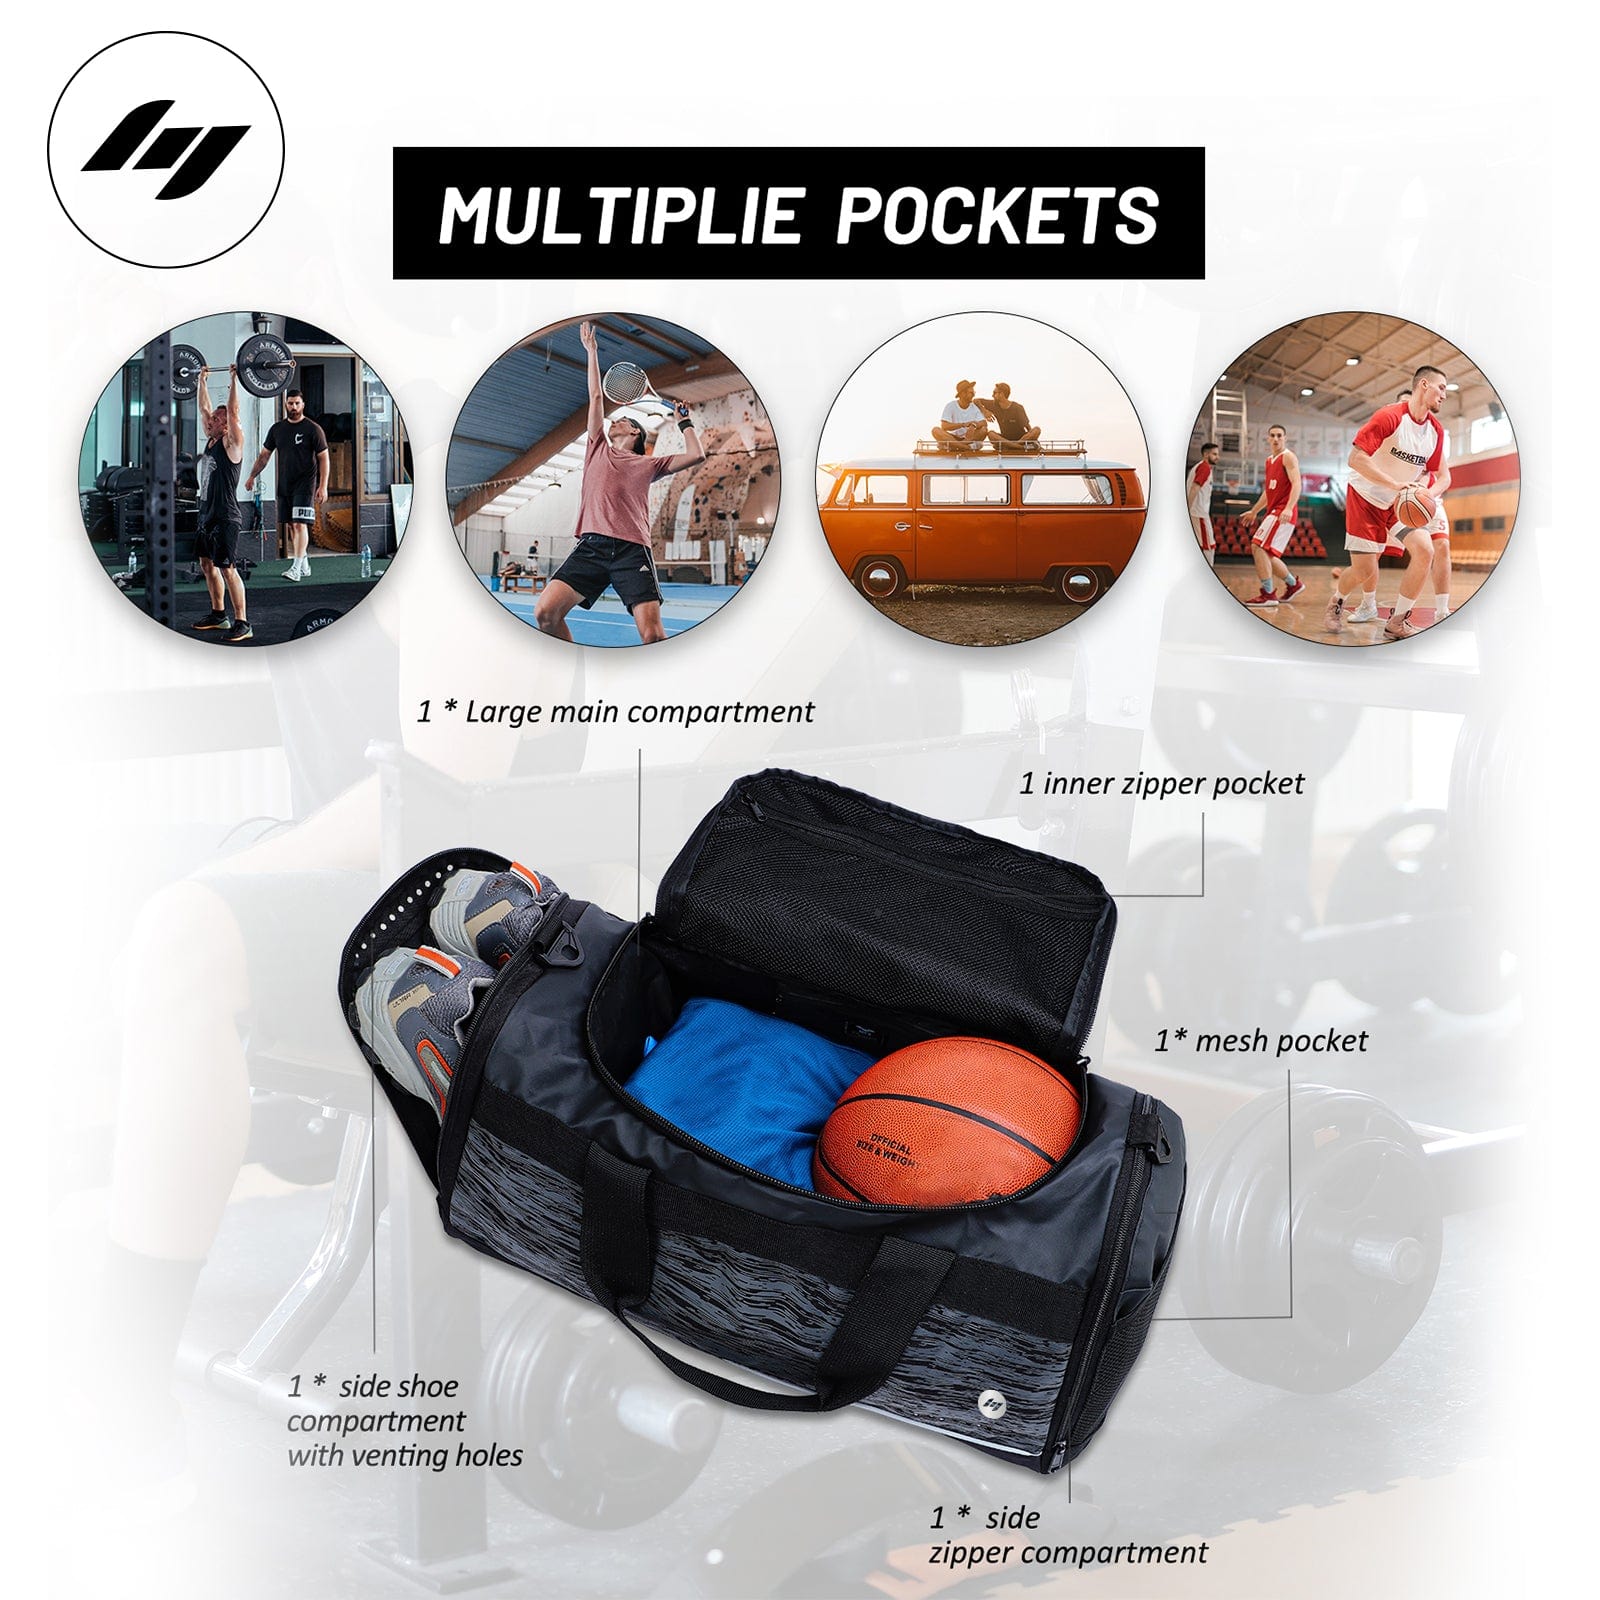 MIER Large Waterproof Duffel Bag Rolltop Dry Backpack Duffle Bags for  Kayaking, Rafting, Boating, Swimming, Camping, Travel, Gym, Beach, 60L,  Dark Blue - Yahoo Shopping